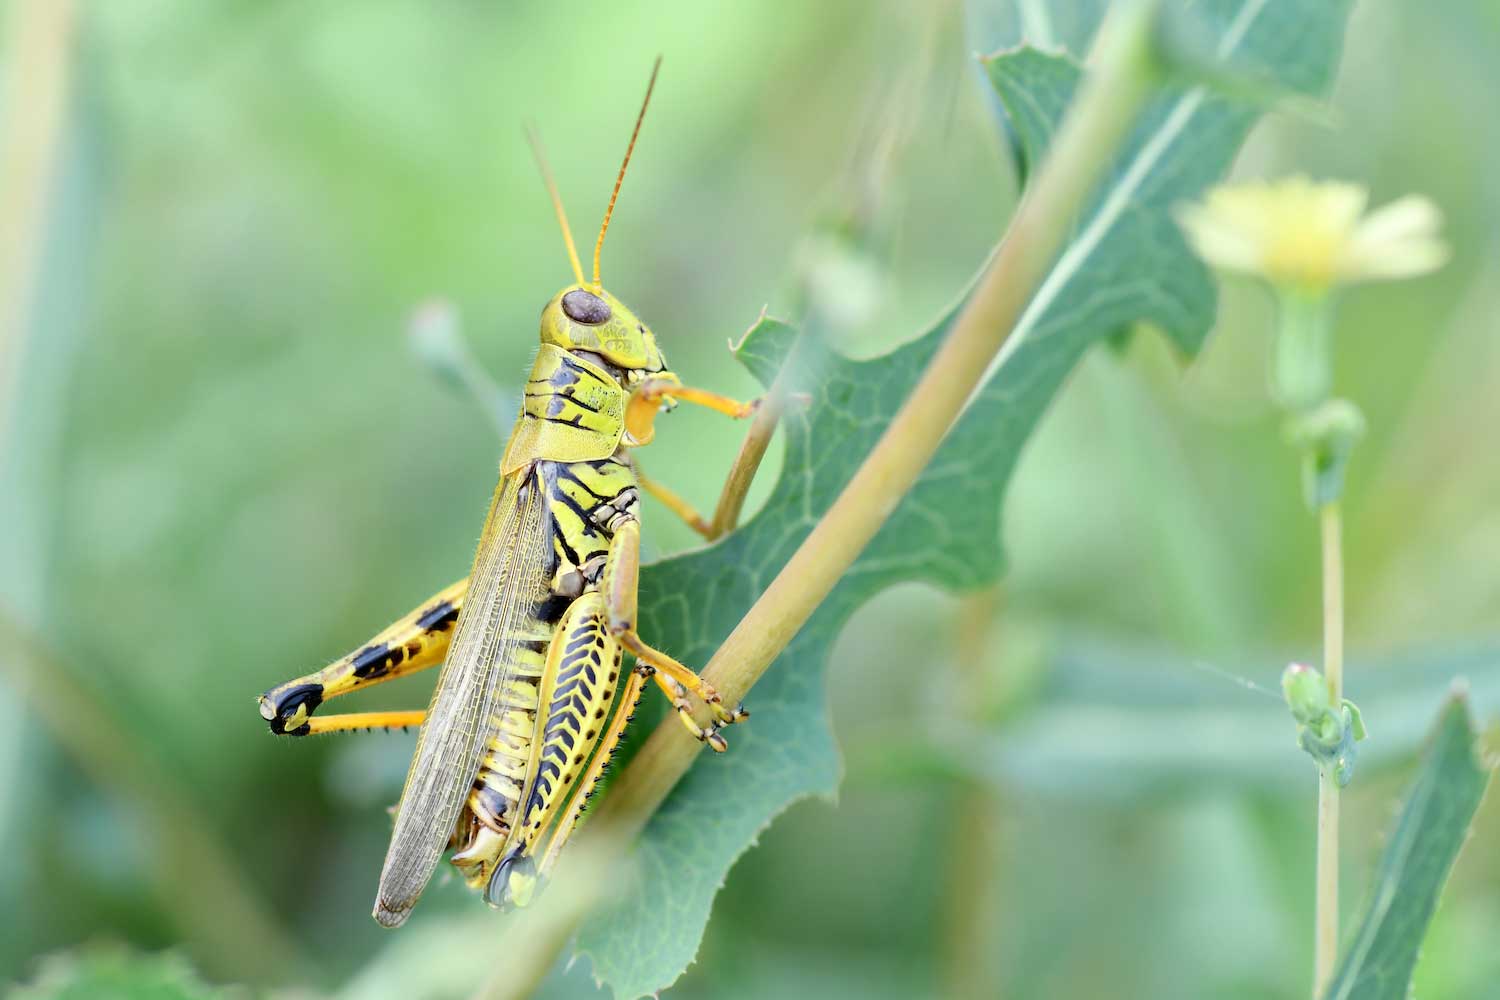 A grasshopper on a plant stem.